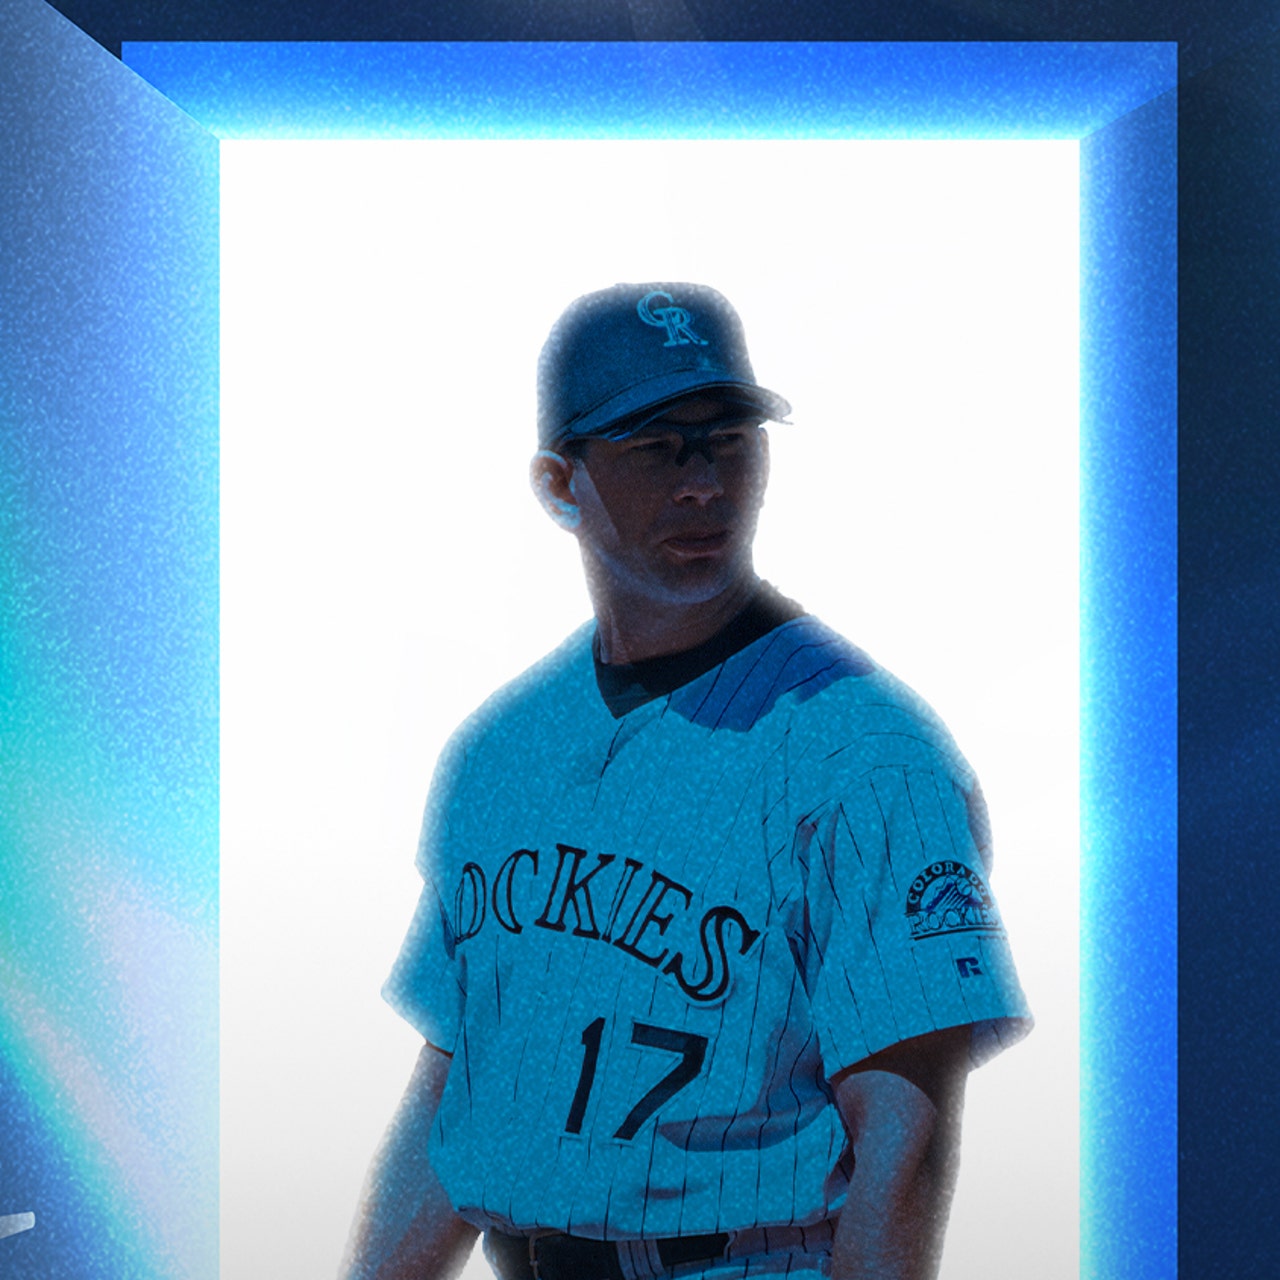 College Baseball Hub on Instagram: #MLBMonday is Troy Tulowitzki